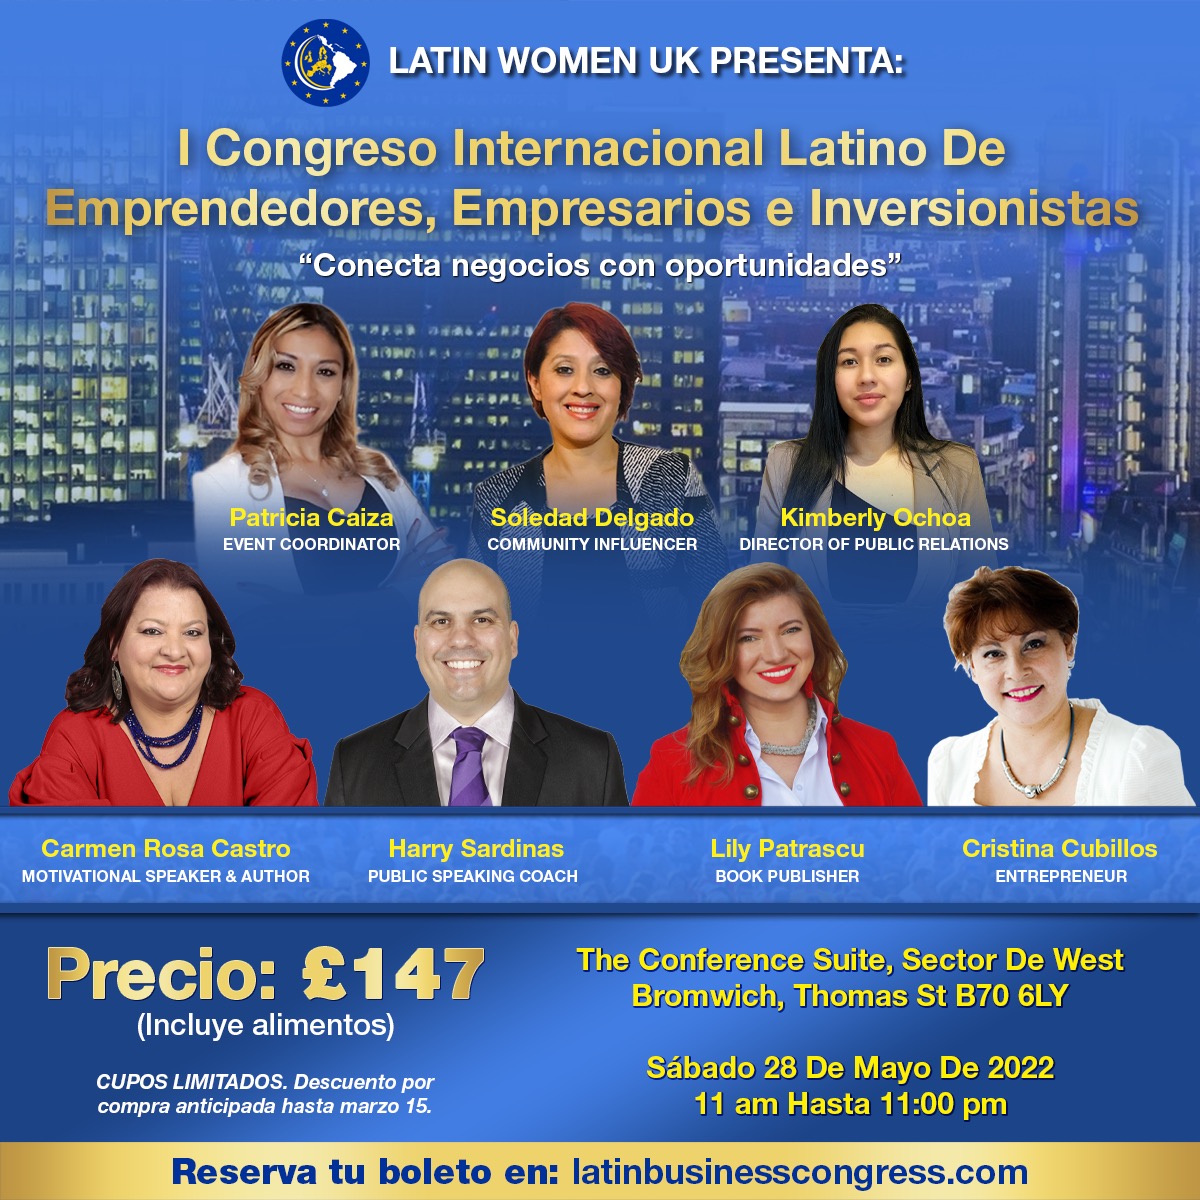 Congreso Internacional Latino de Emprendedores, Empresarios e Inversionistas